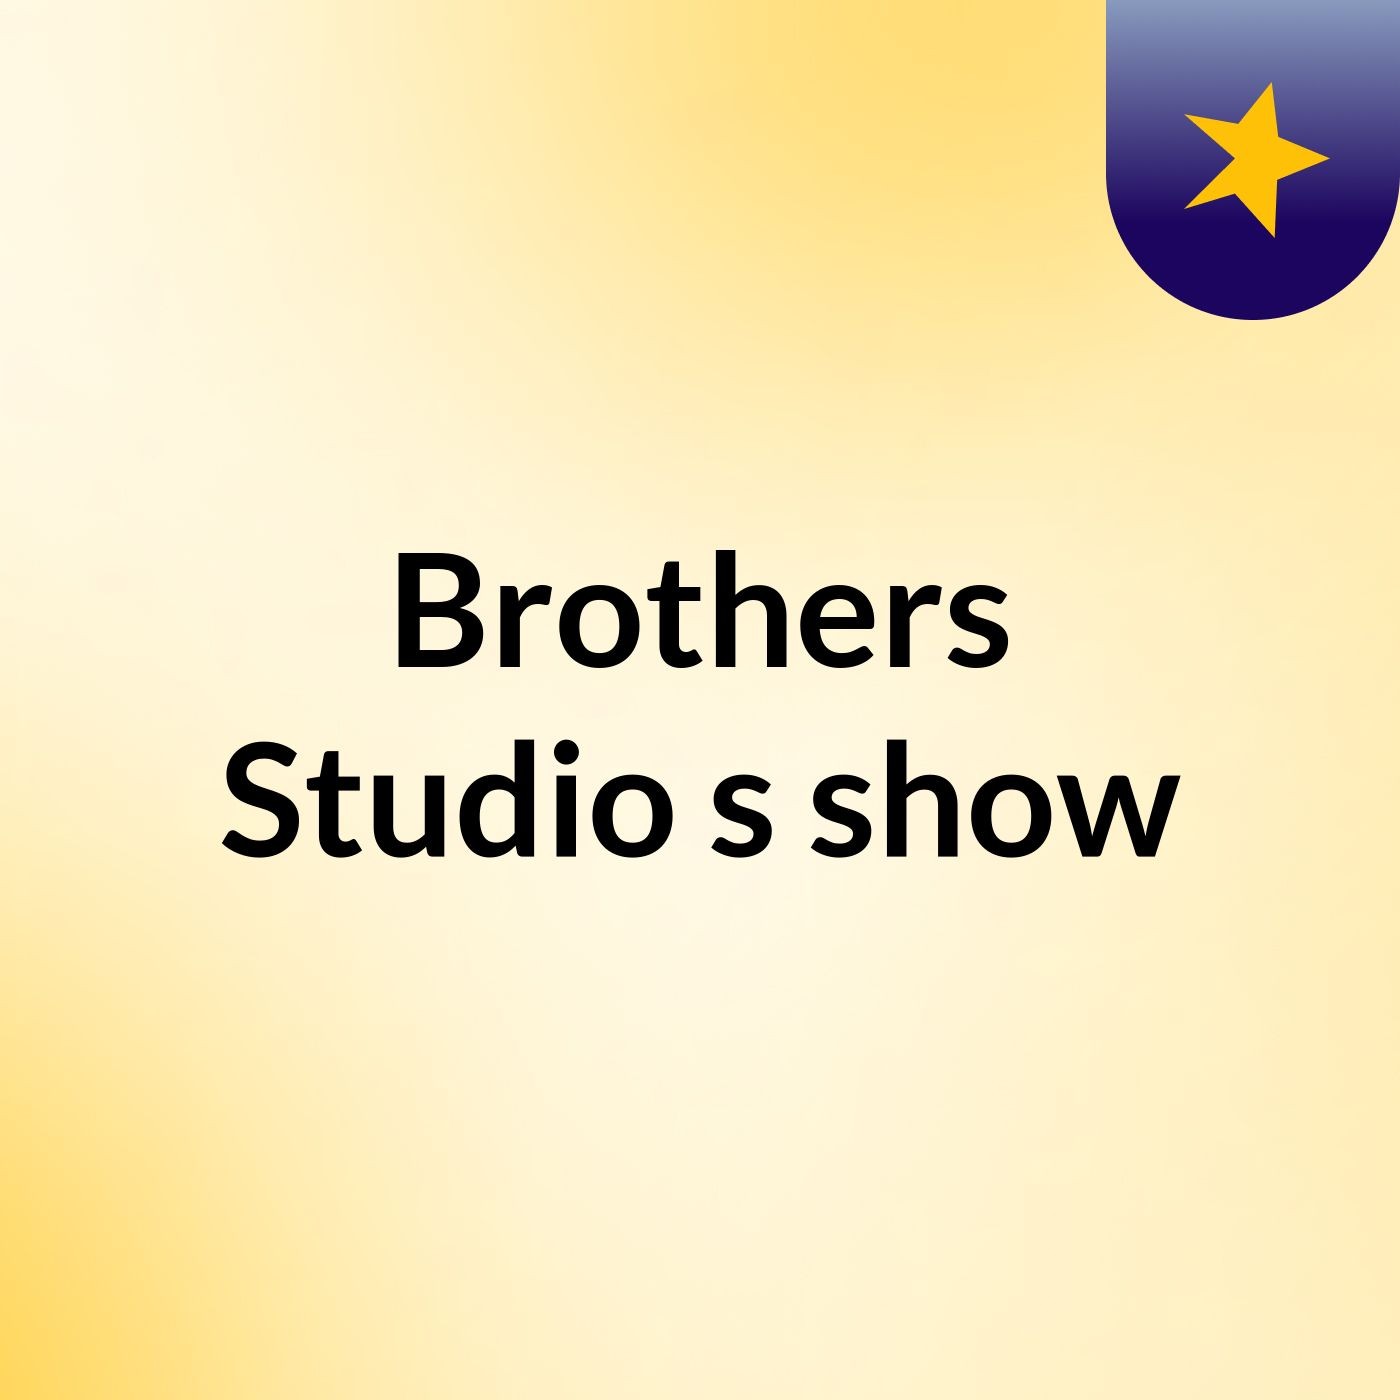 Brothers Studio's show